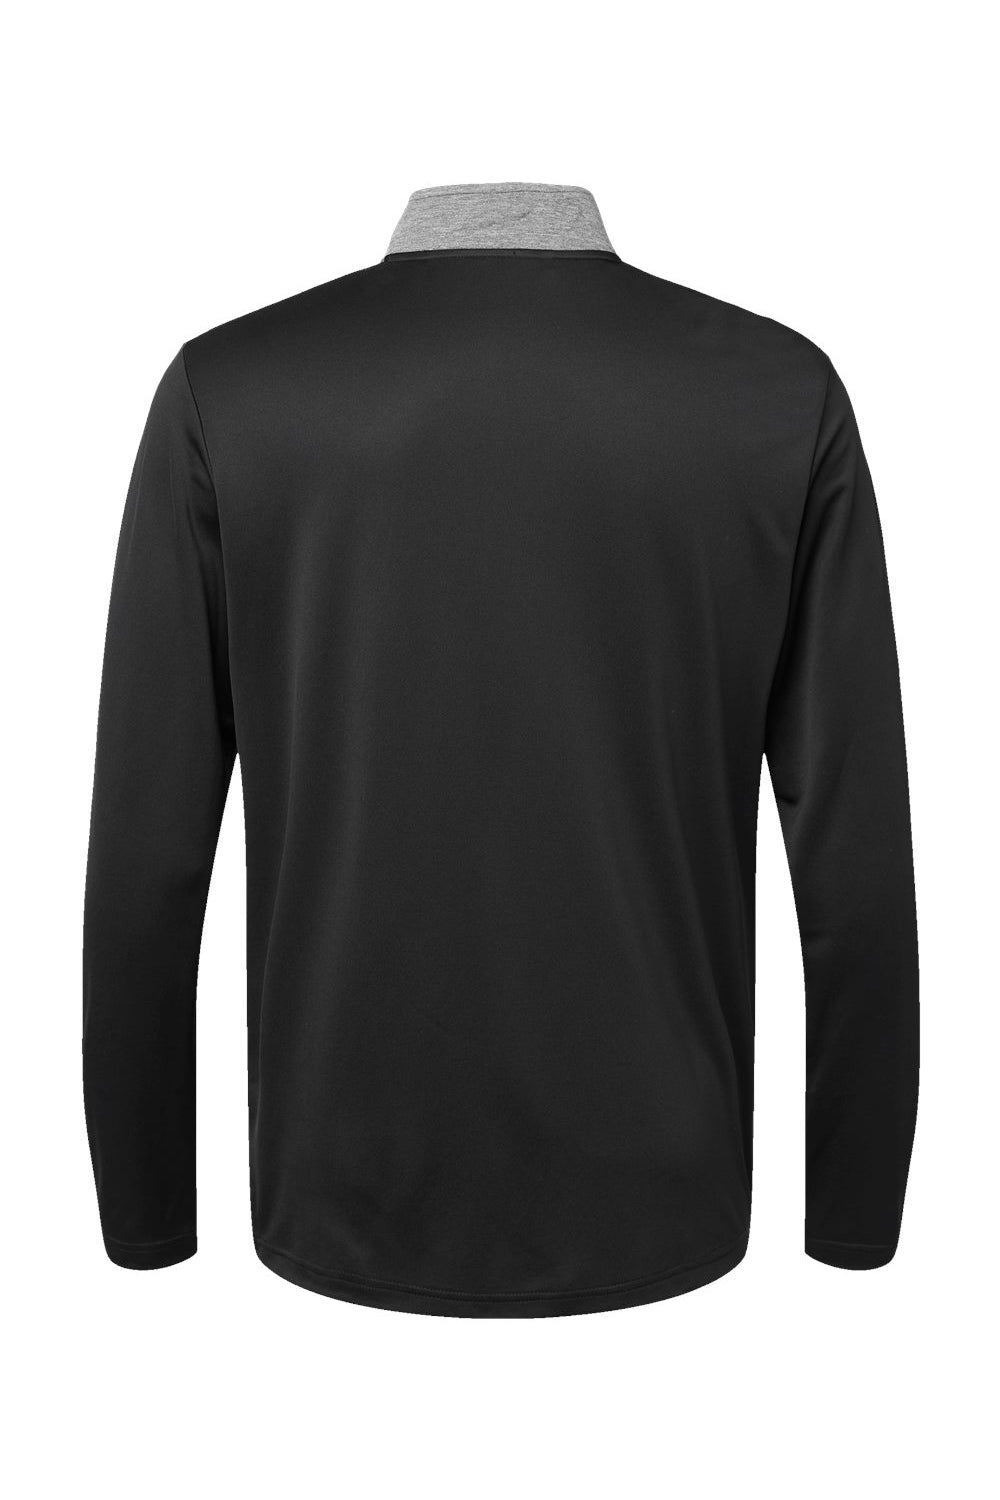 Adidas A522 Mens Heather Block Print 1/4 Zip Pullover Black Melange/Black/Grey Flat Back